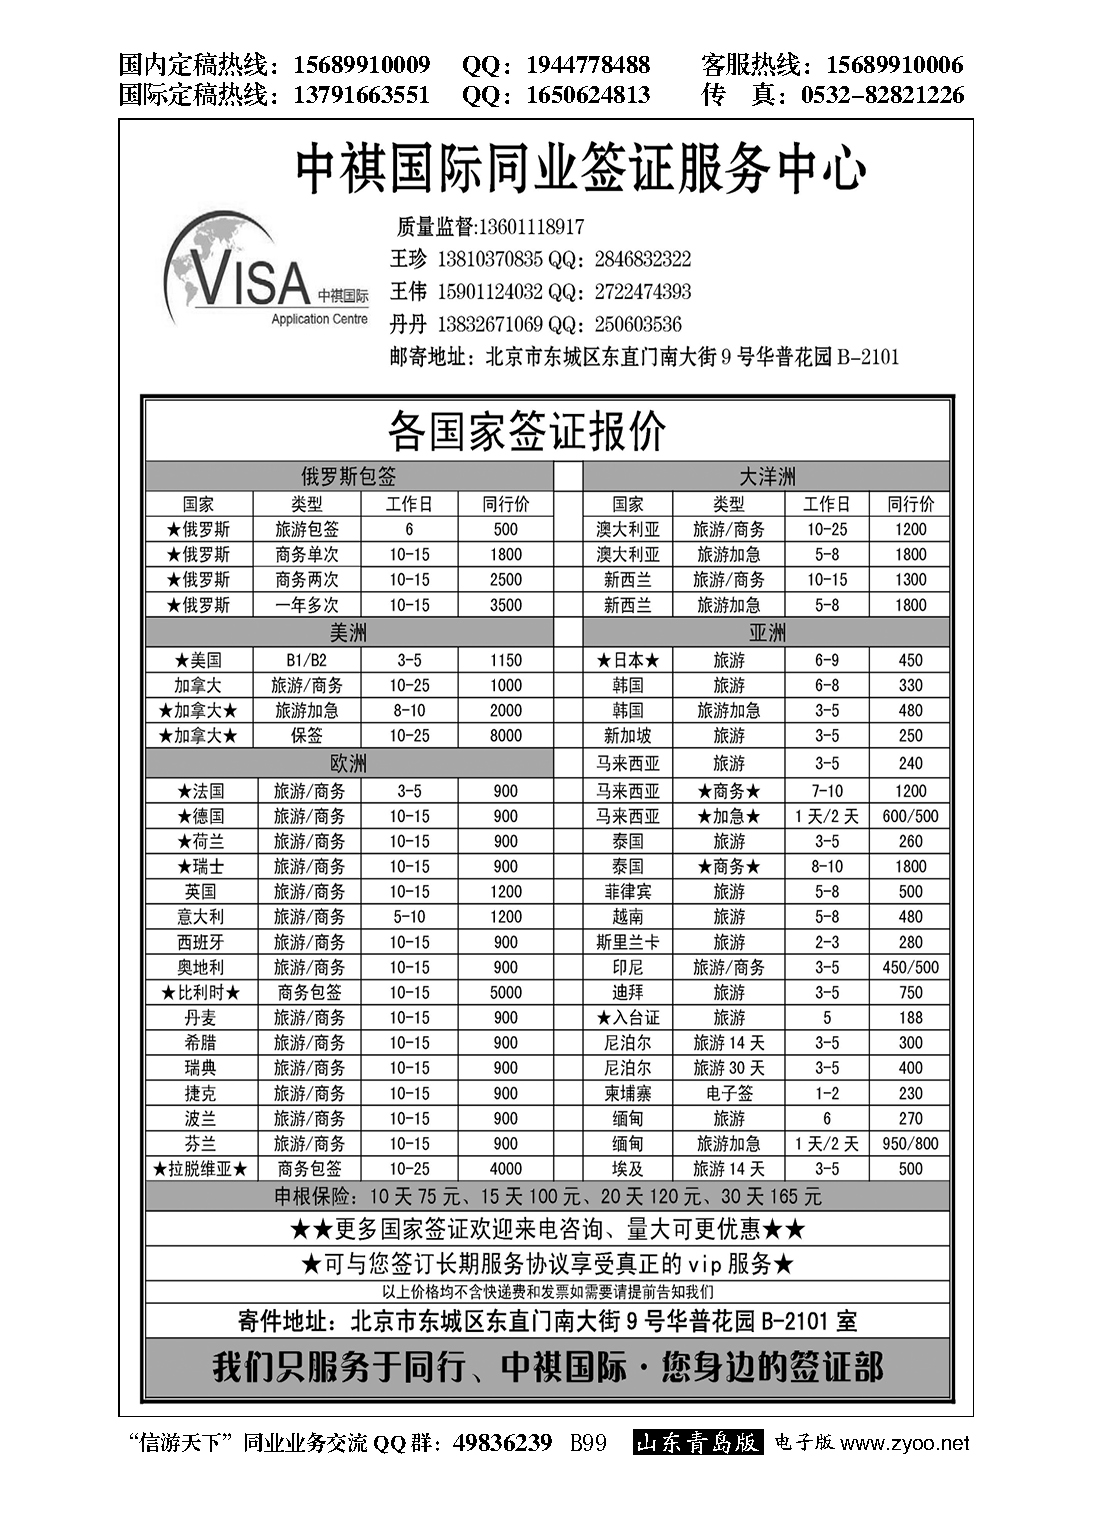 B黑099中祺国际同业签证服务中心…签证专版